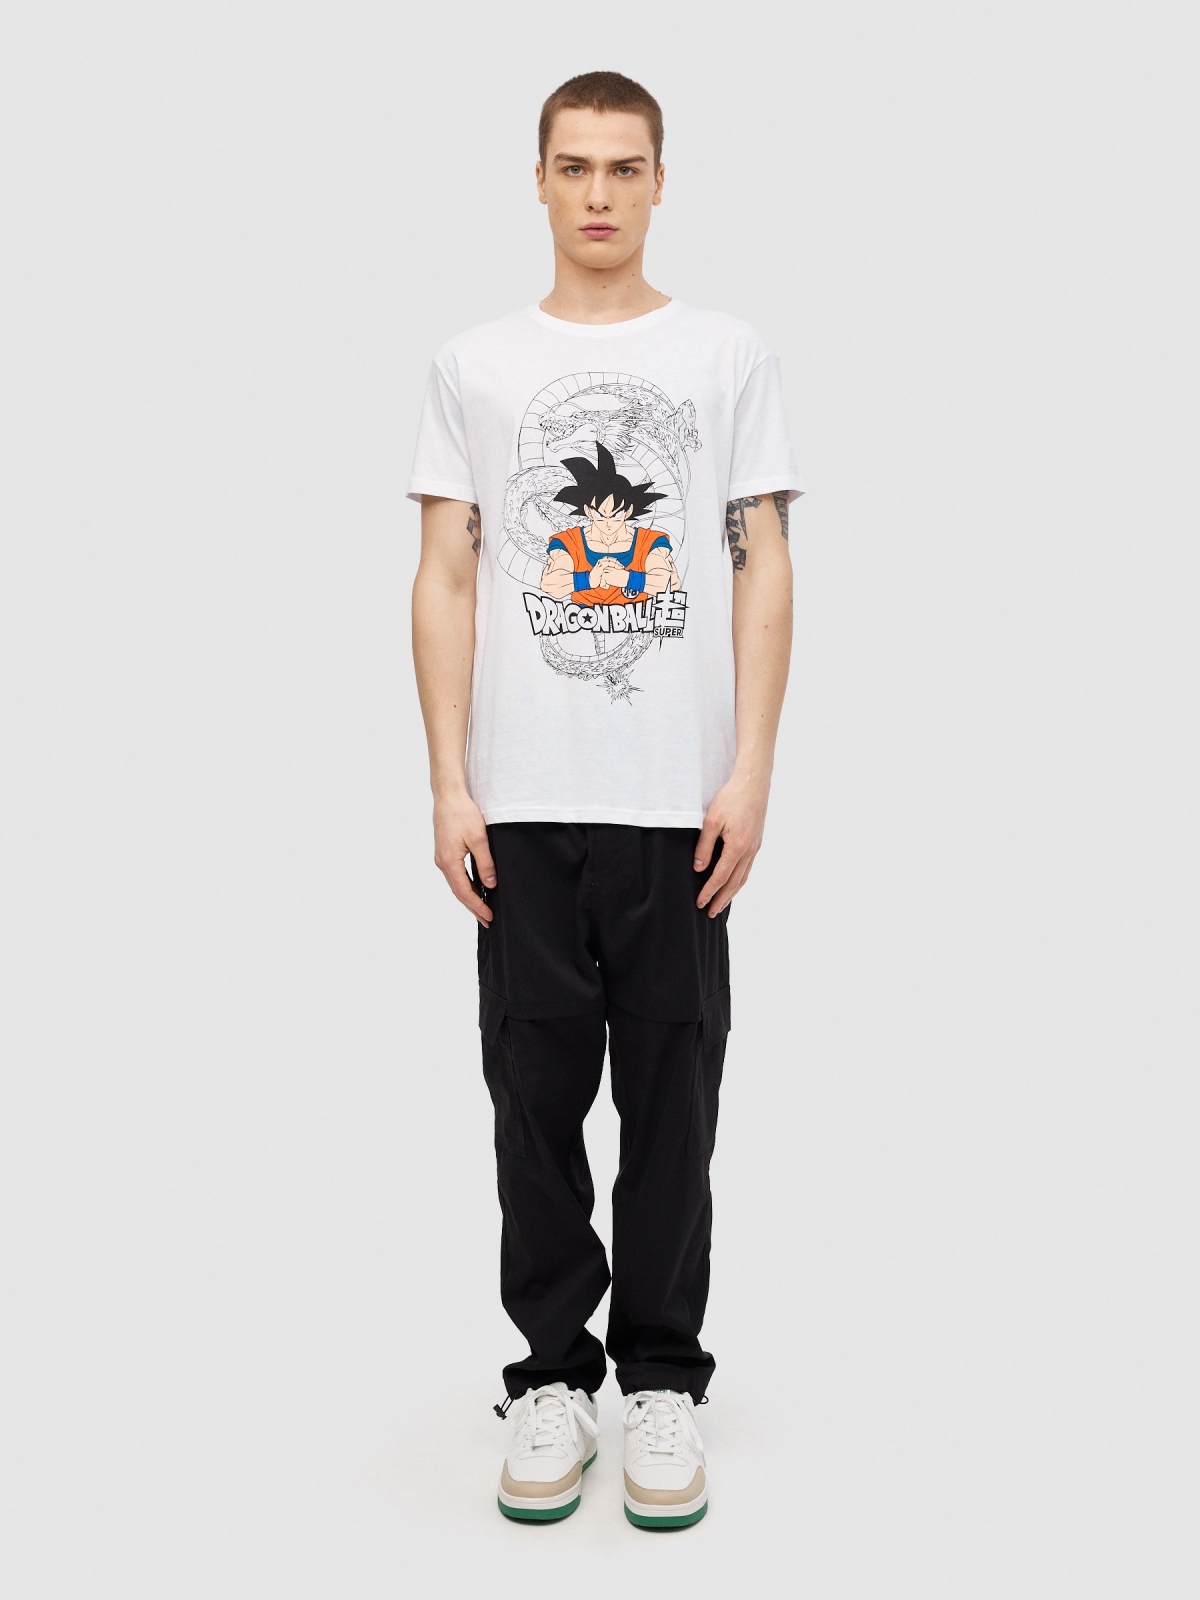 T-shirt Dragon Ball Super branco vista geral frontal